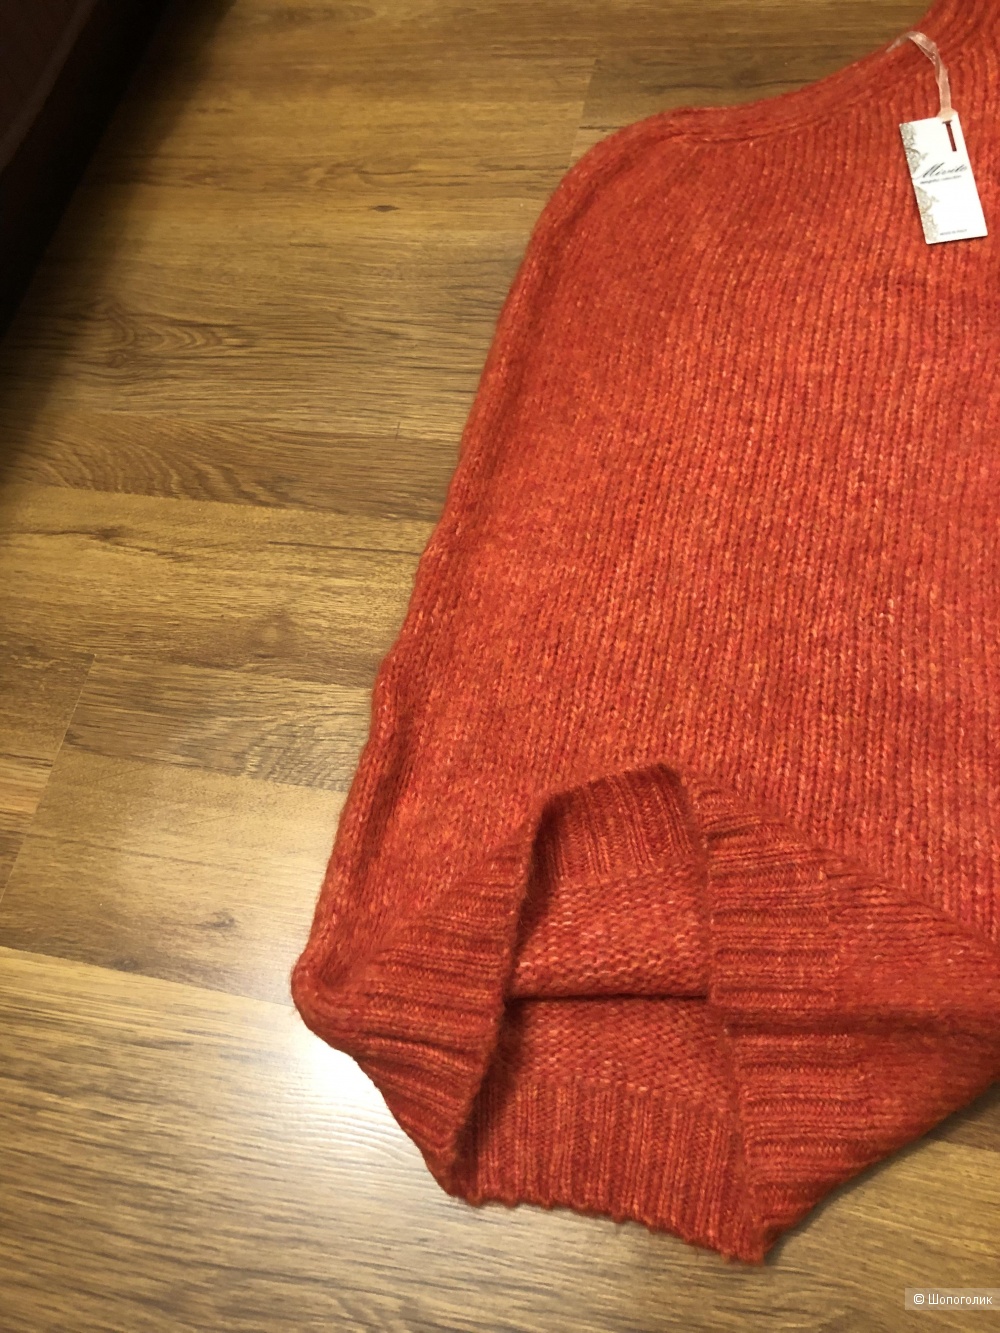 Платье пуловер свитер Mivite размер М. Другой цвет.